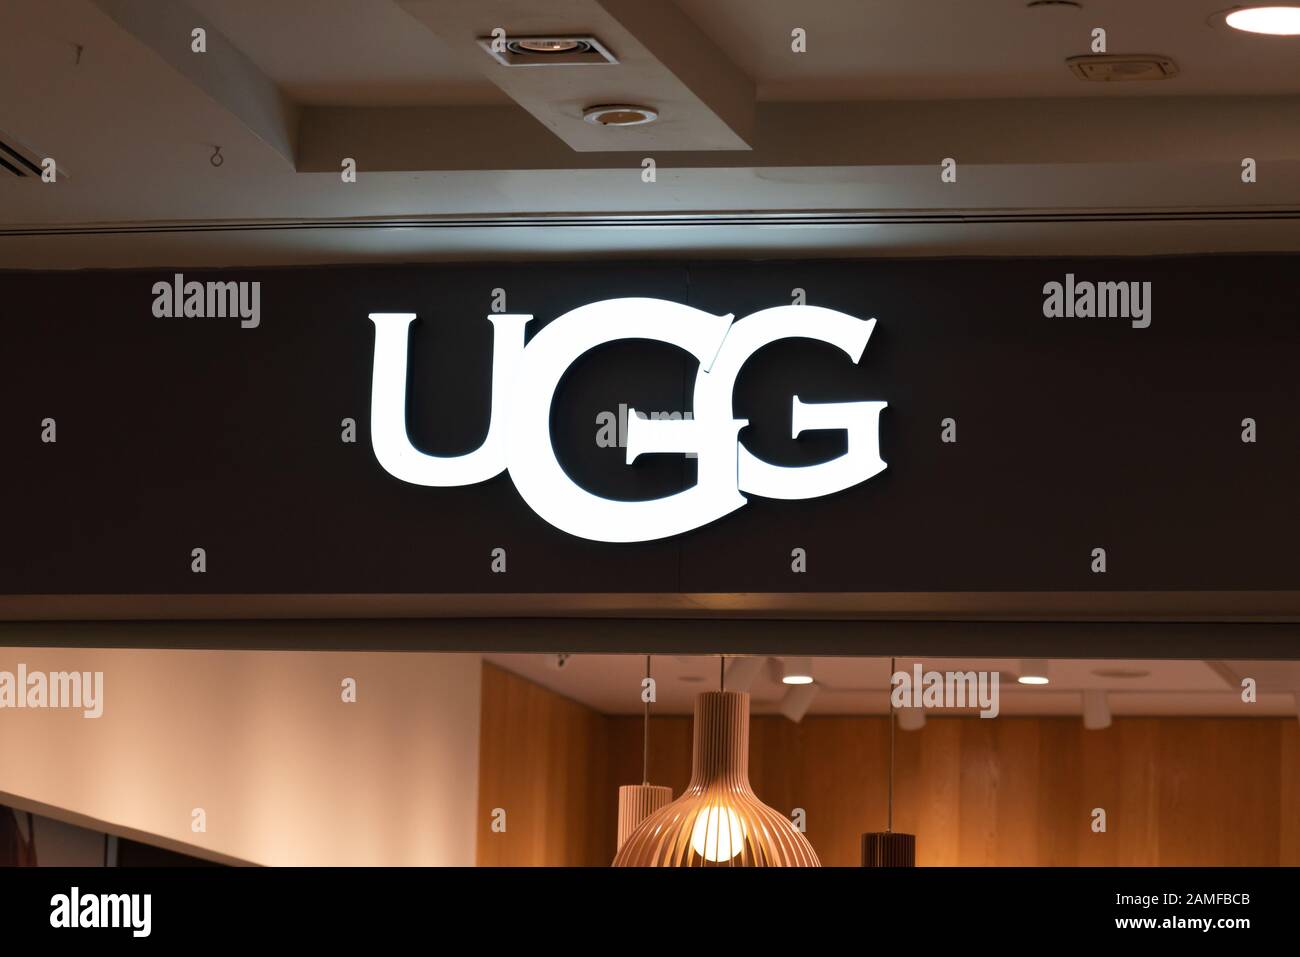 Ugg logo hi-res stock photography images -